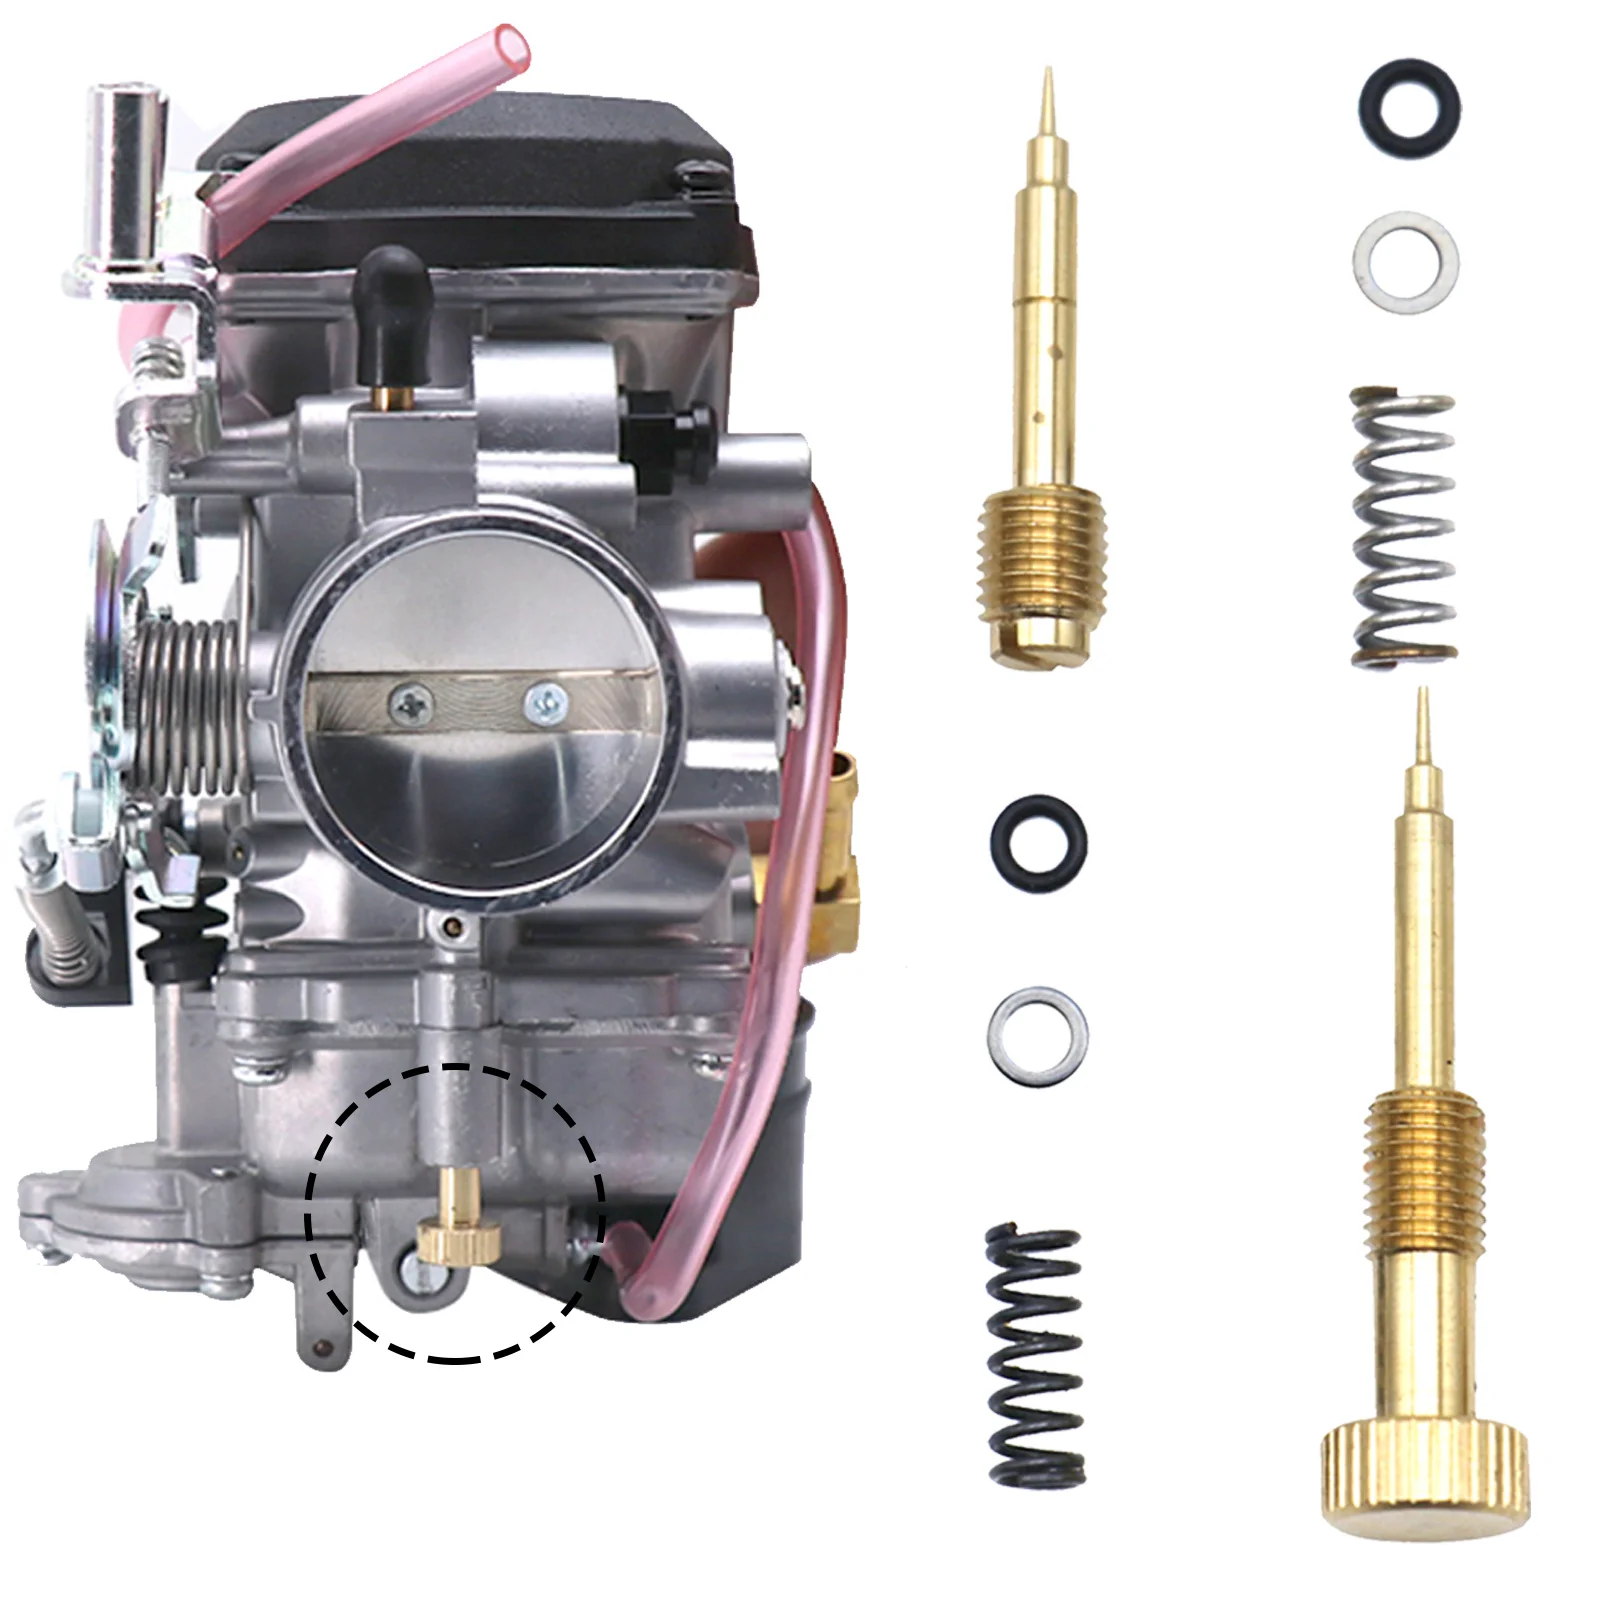 1PC Motorcycle Carburetor Air Adjusting Screw Idle Mixture Fuel Ratio For Harley CV40 Keihin CVK34 CVK36 CVK40 |